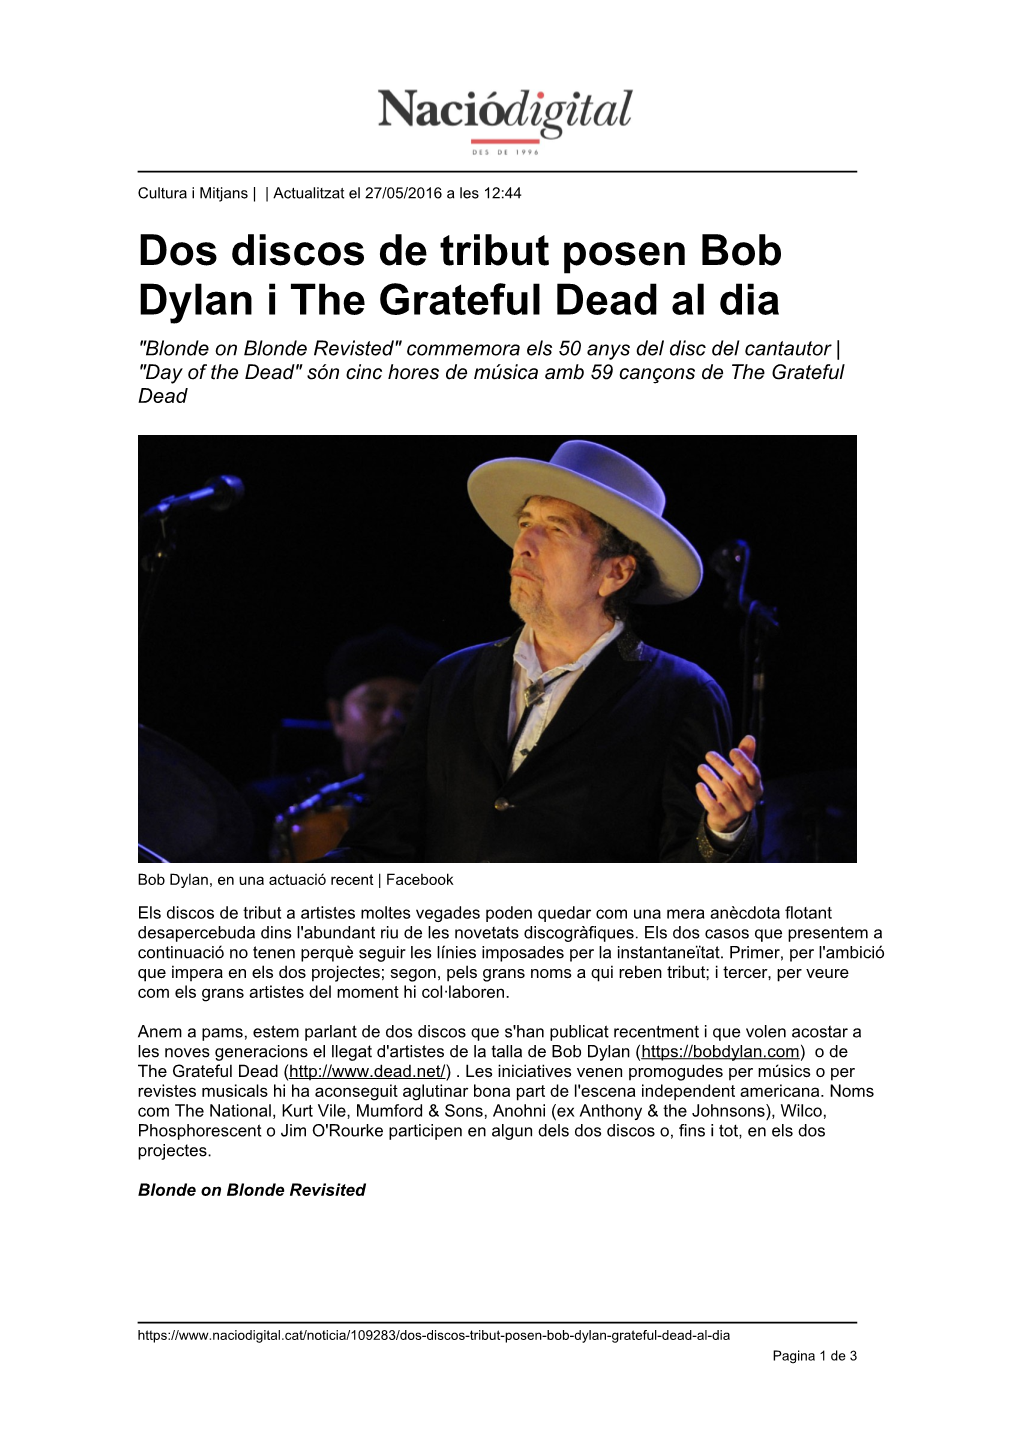 Dos Discos De Tribut Posen Bob Dylan I the Grateful Dead Al